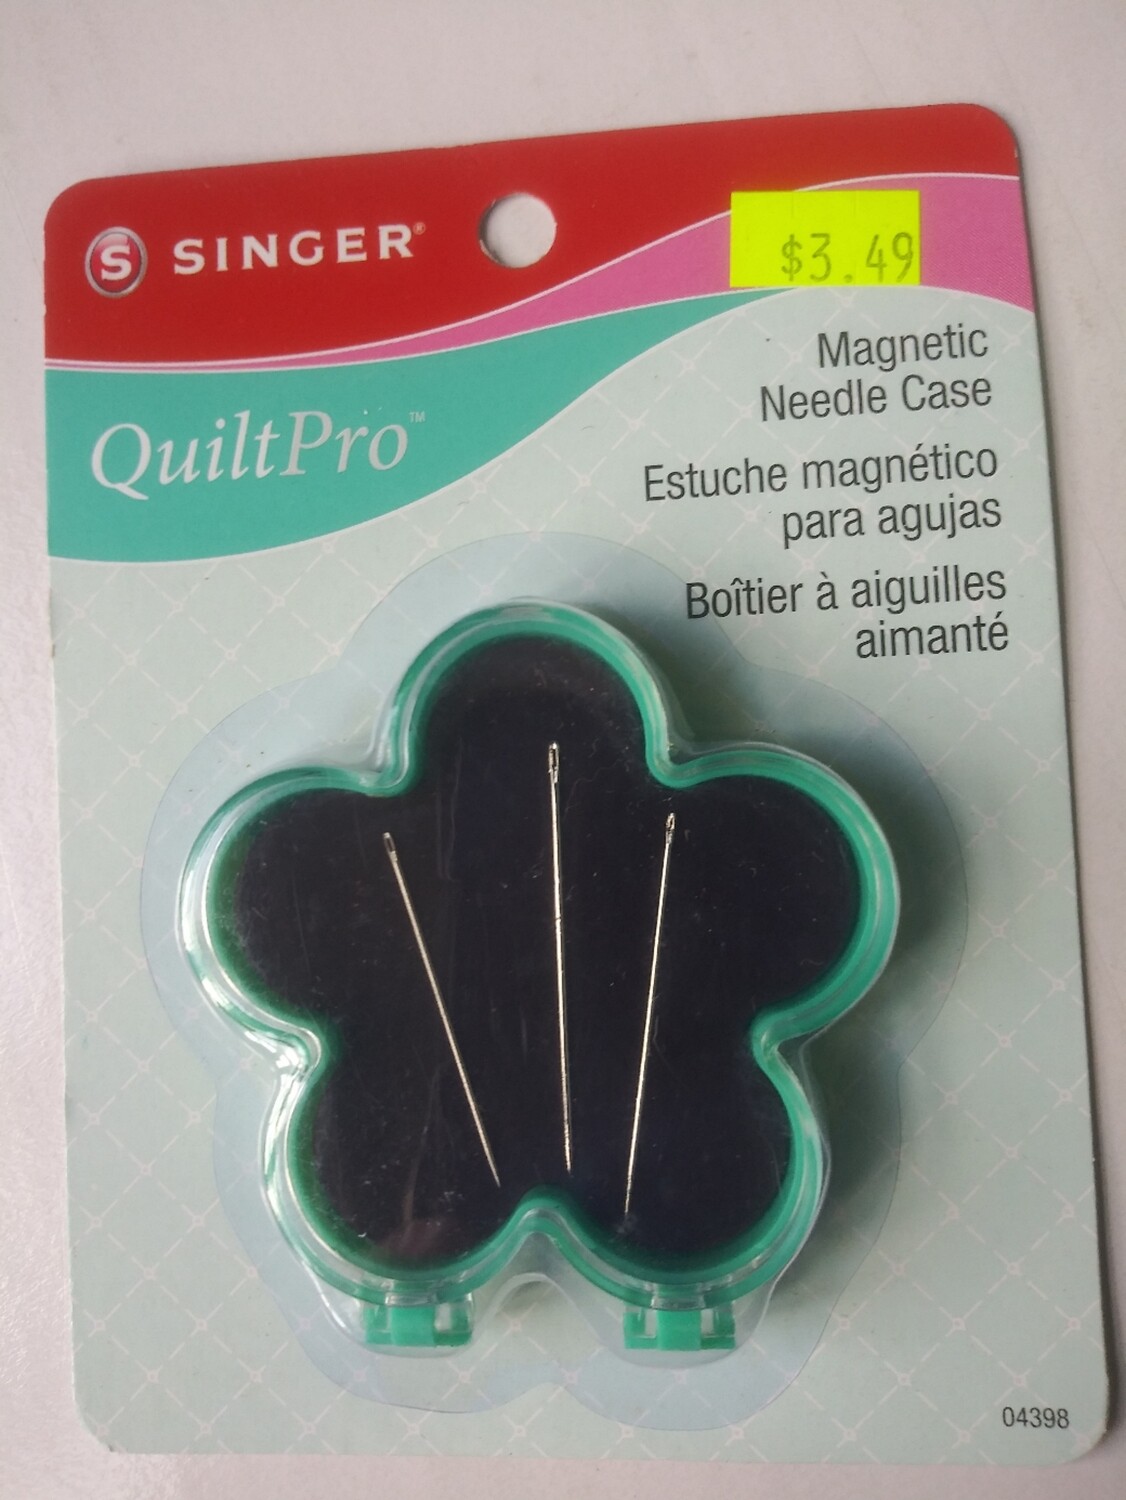 Singer Quilt Pro Magnetic Needle Case